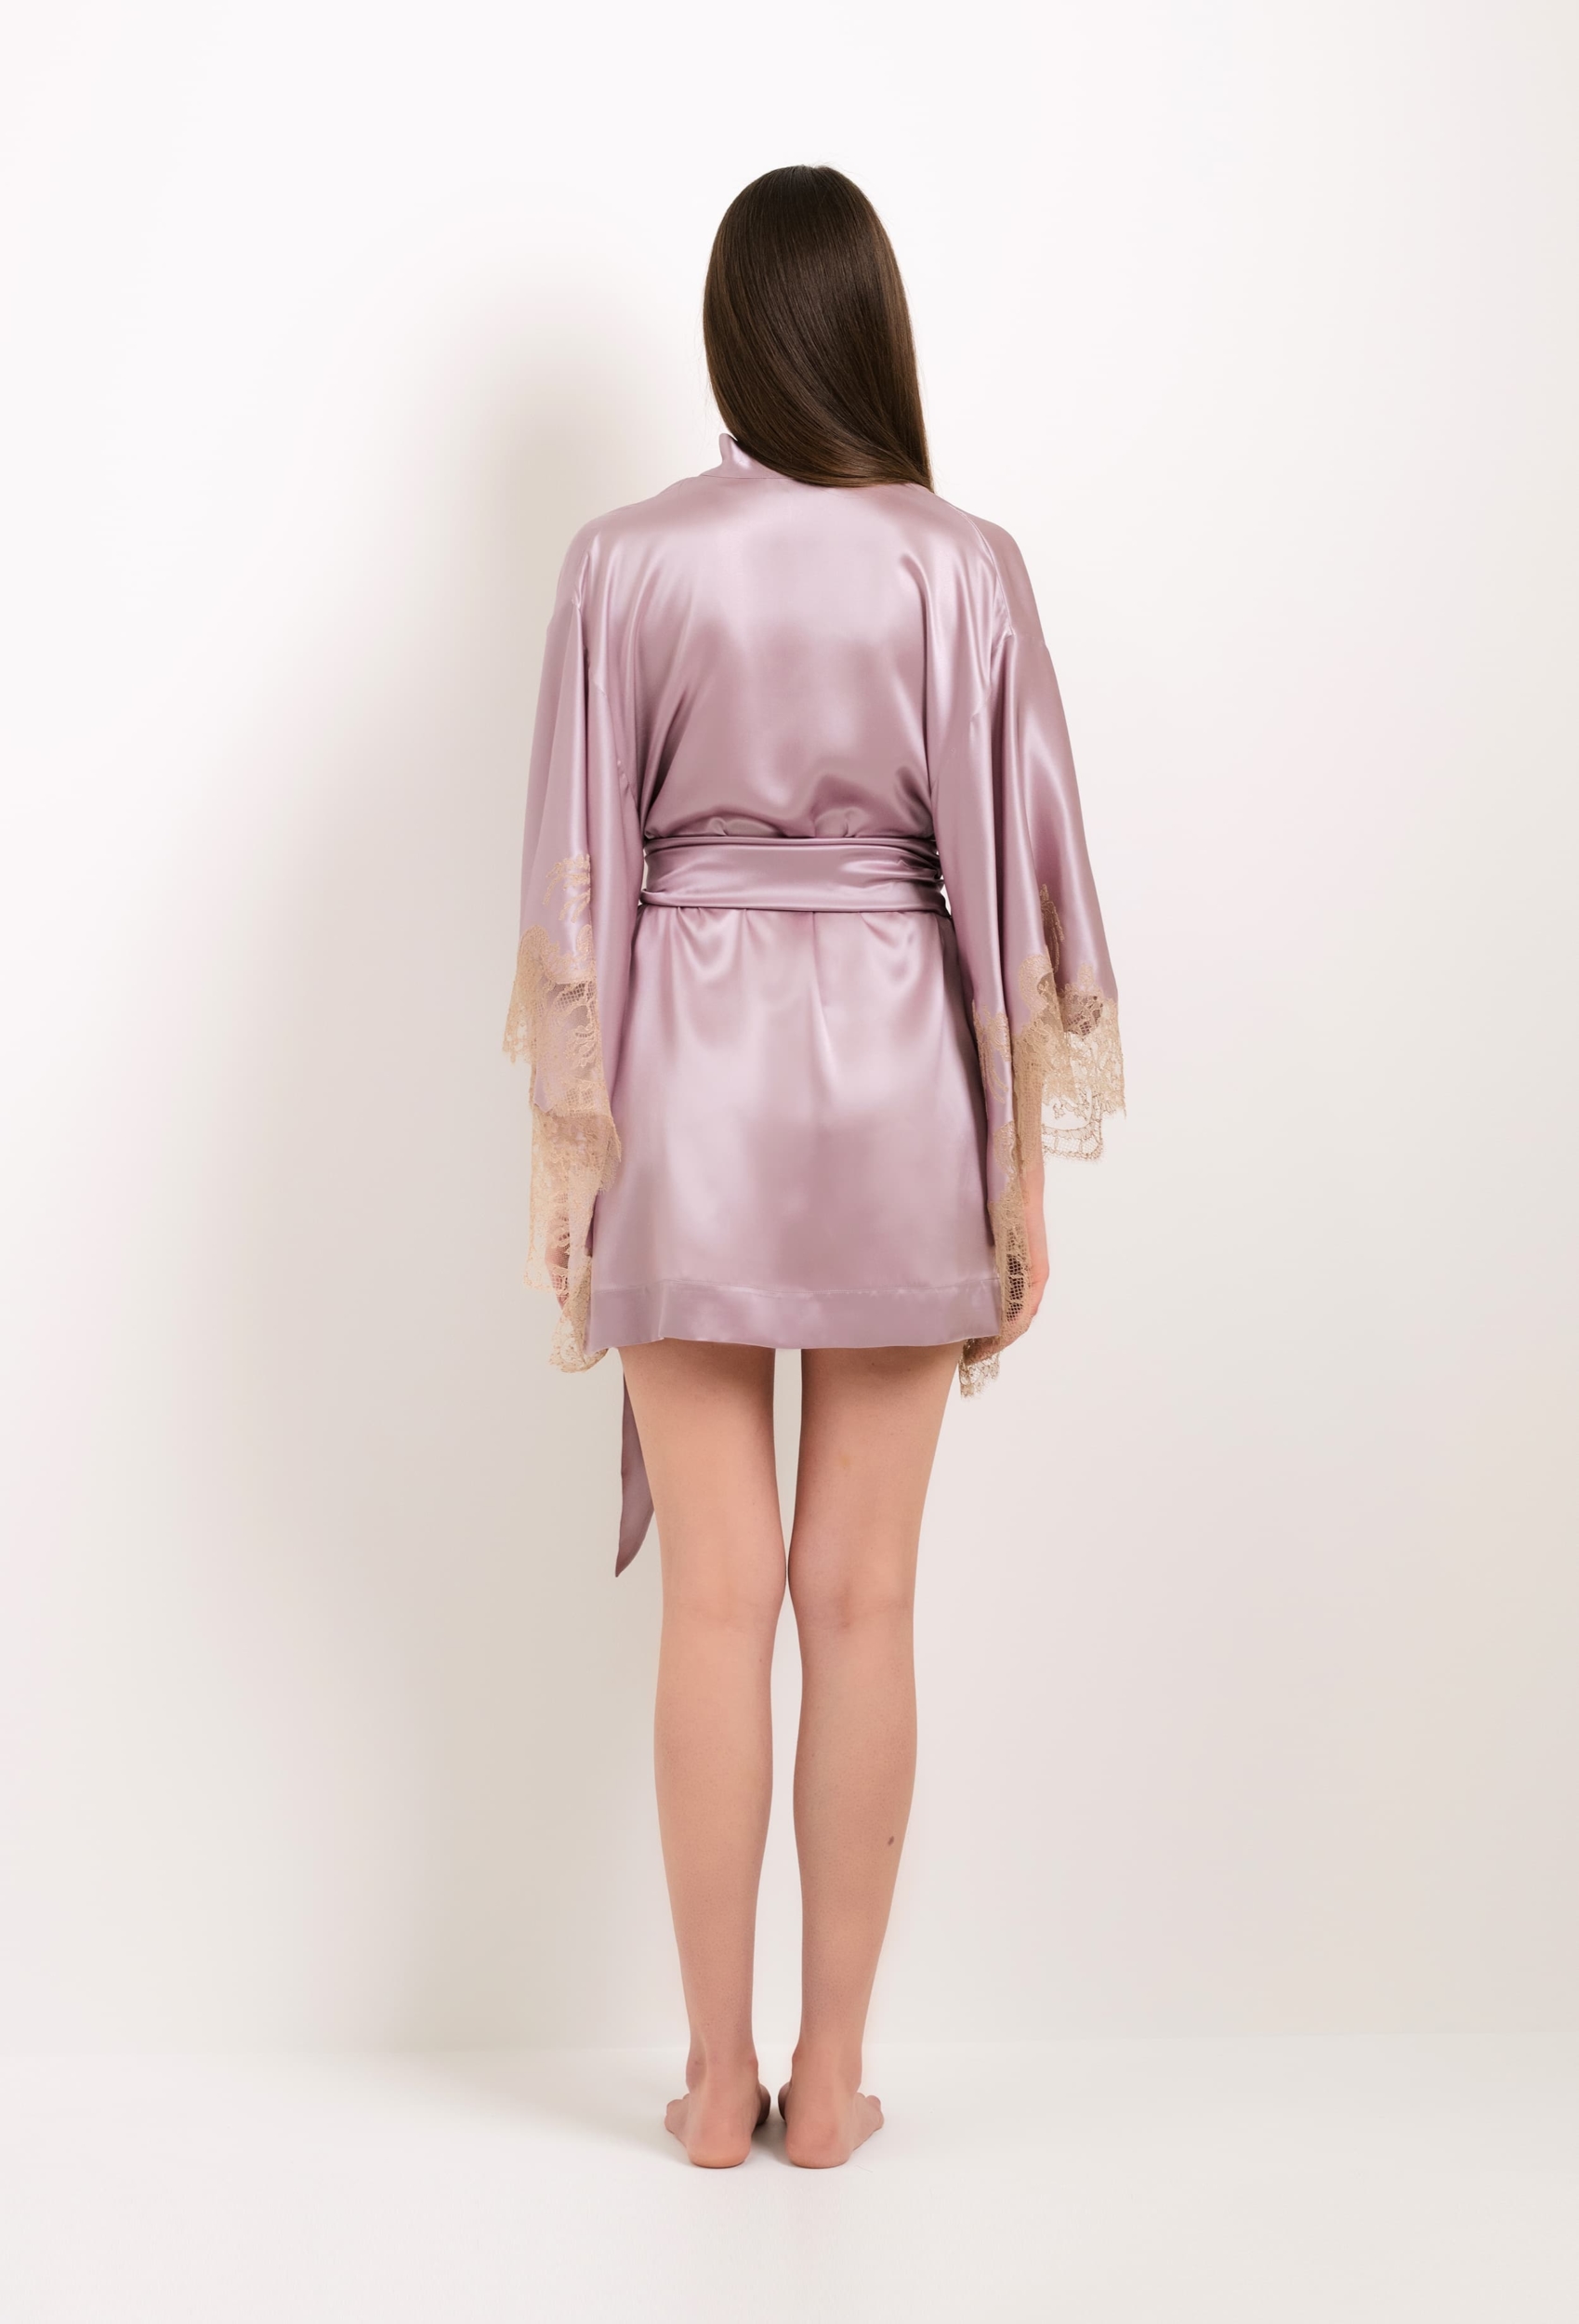 Short silk kimono - lilac and golden Venise Caudry lace - Carine Gilson | Kimonos